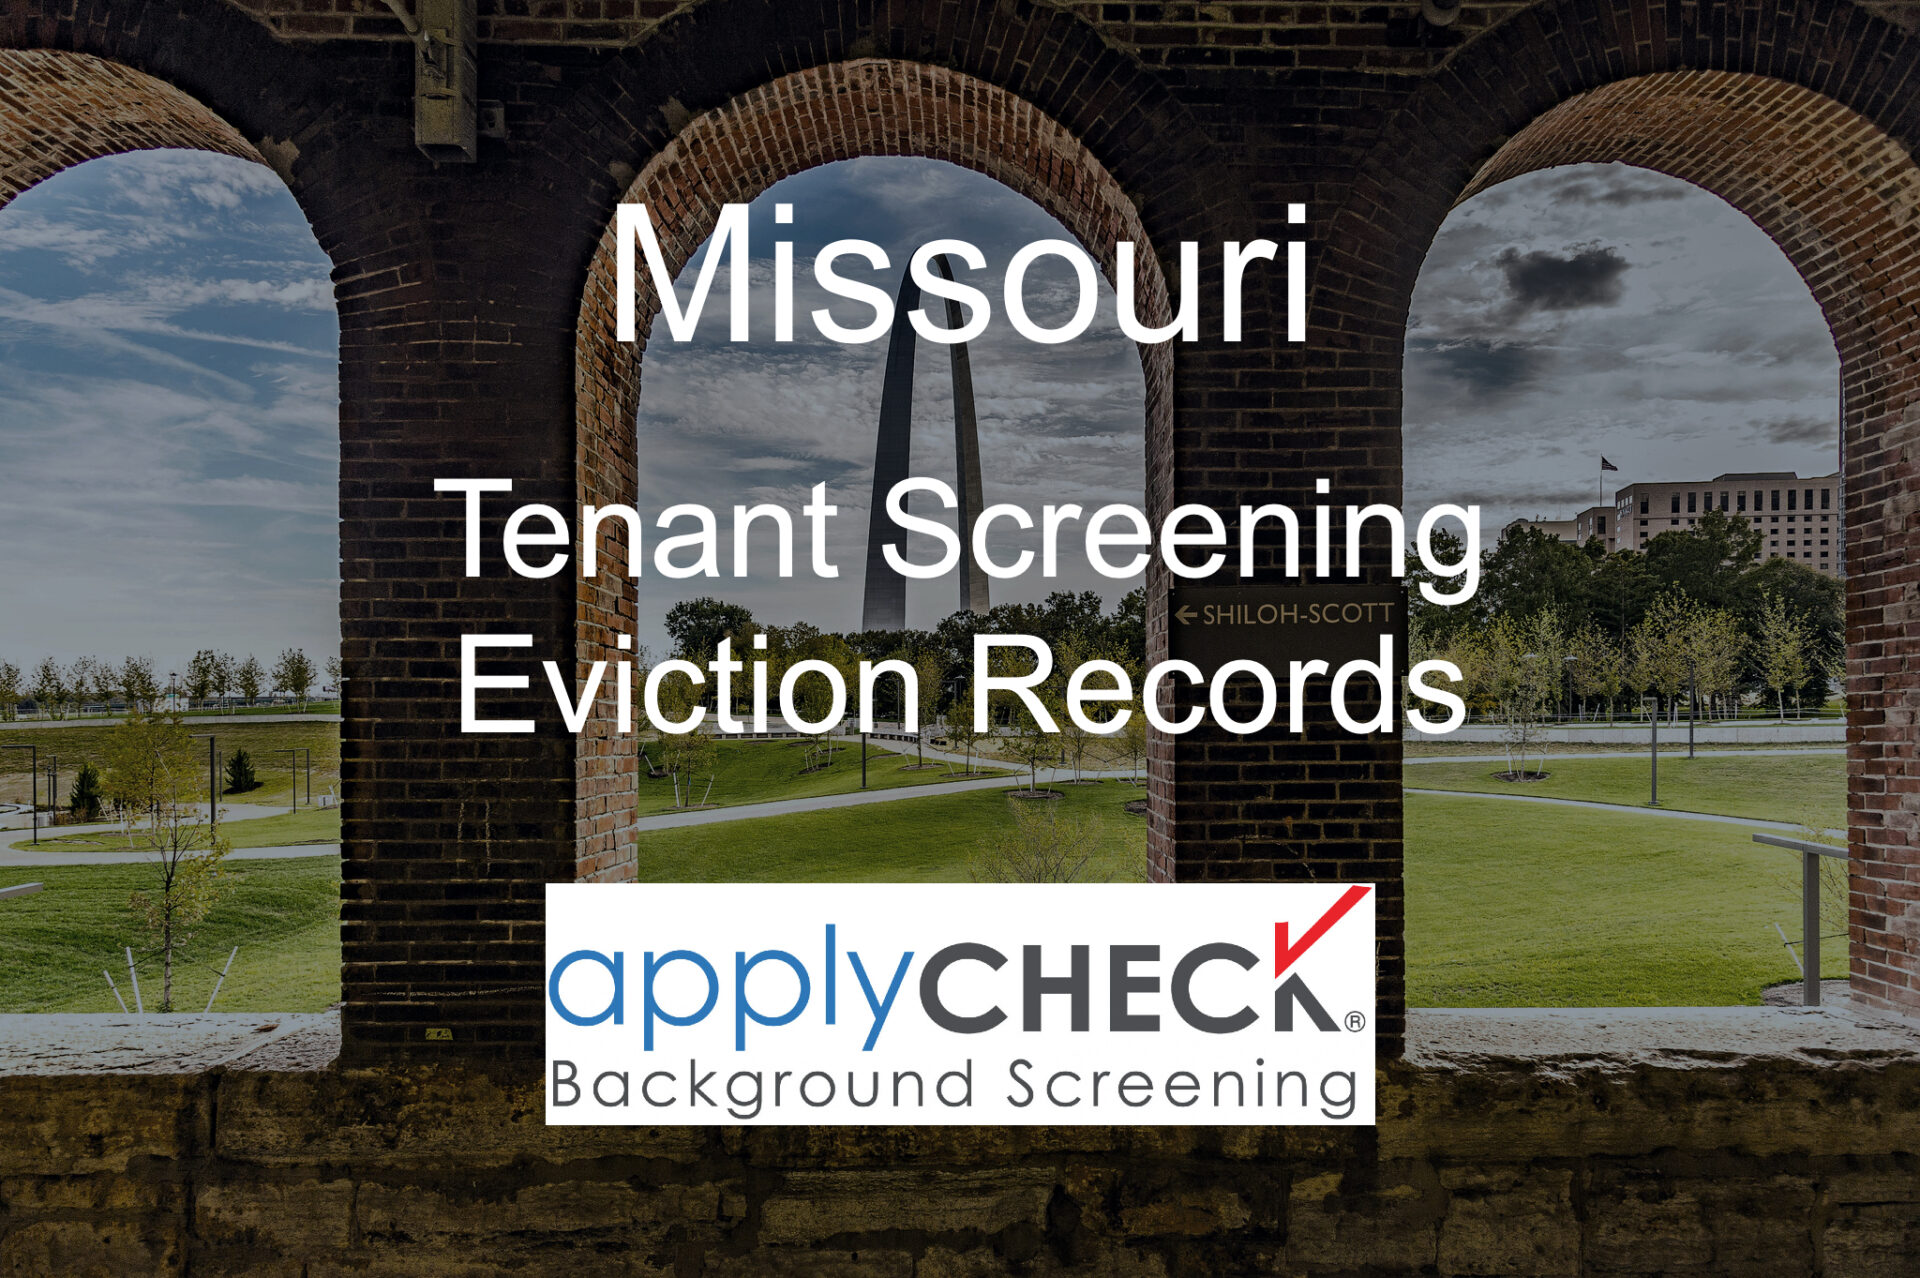 Missouri Tenant Screening and Eviction image